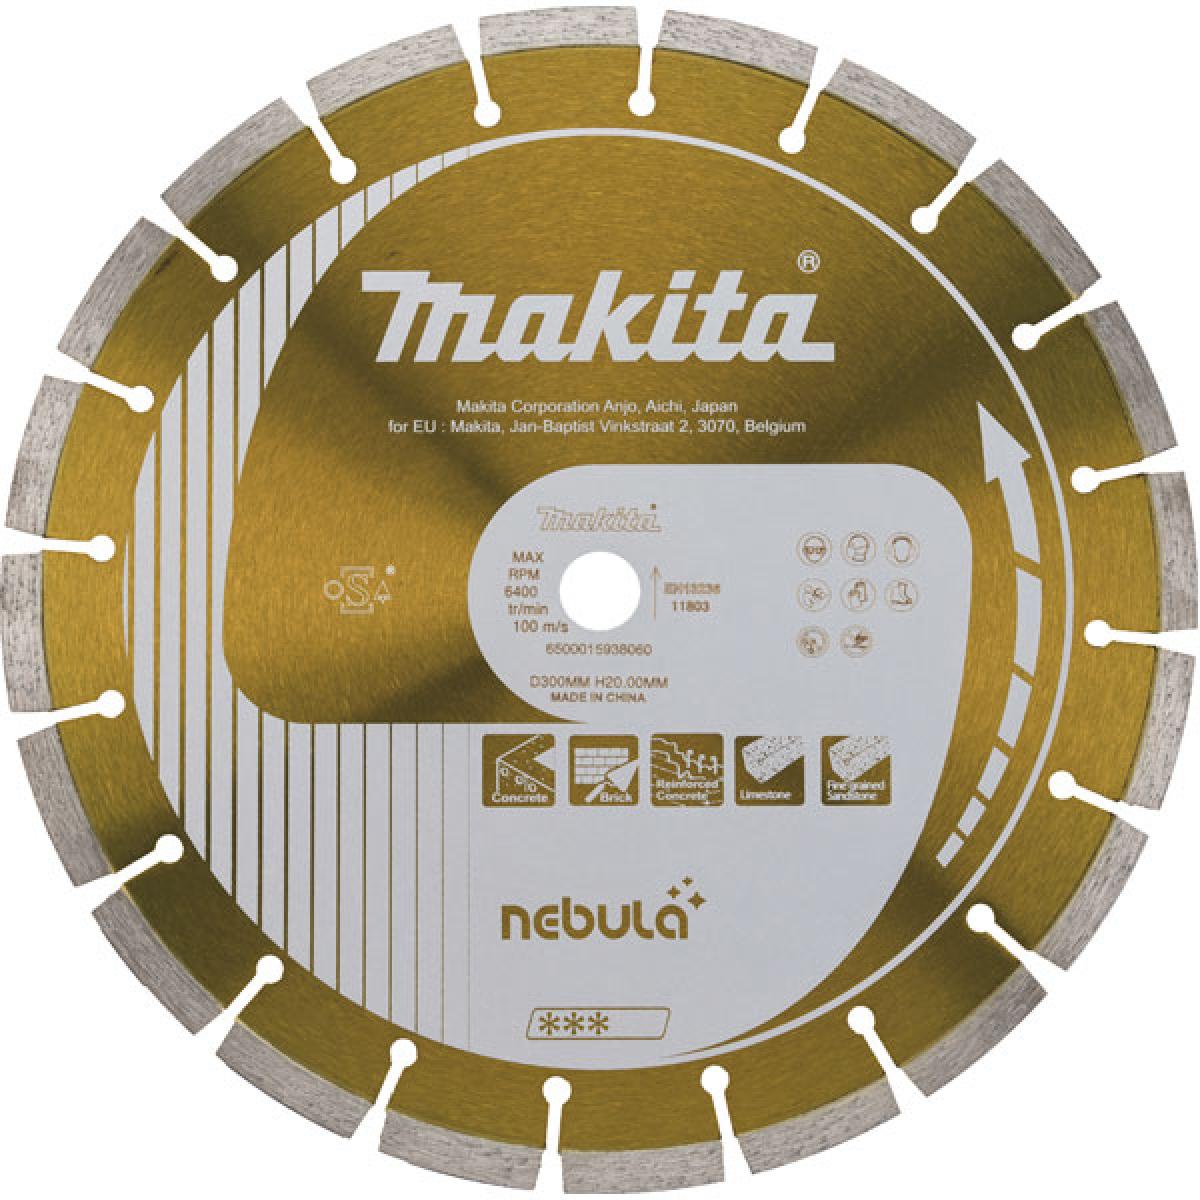 Makita - Makita - Disque diamant NEBULA Ø 350 x 20/25,4 mm - B-54053 - Accessoires meulage